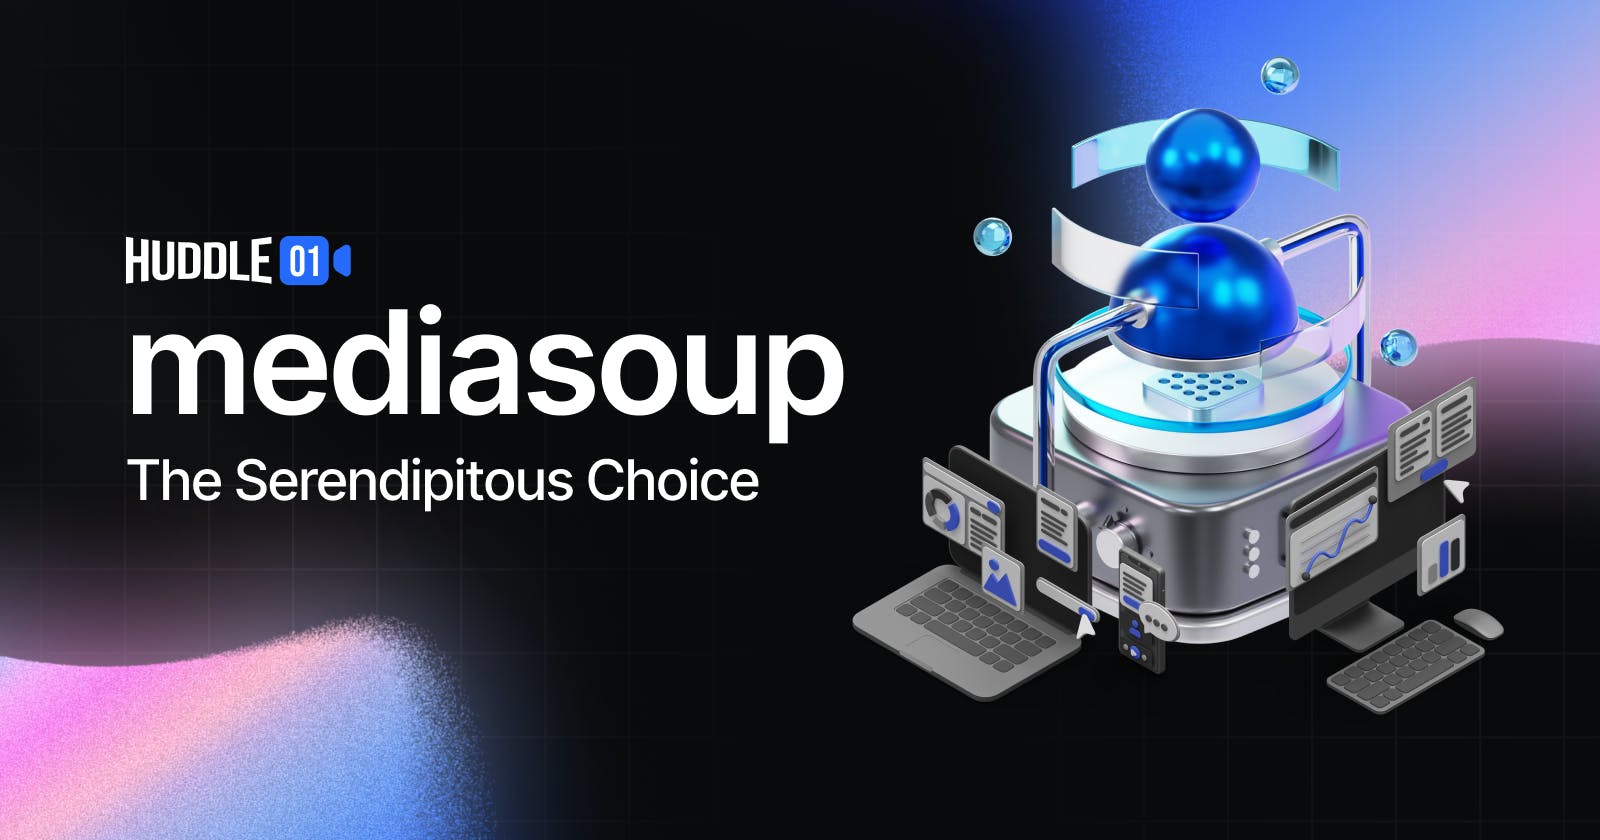 mediasoup - The Serendipitous Choice